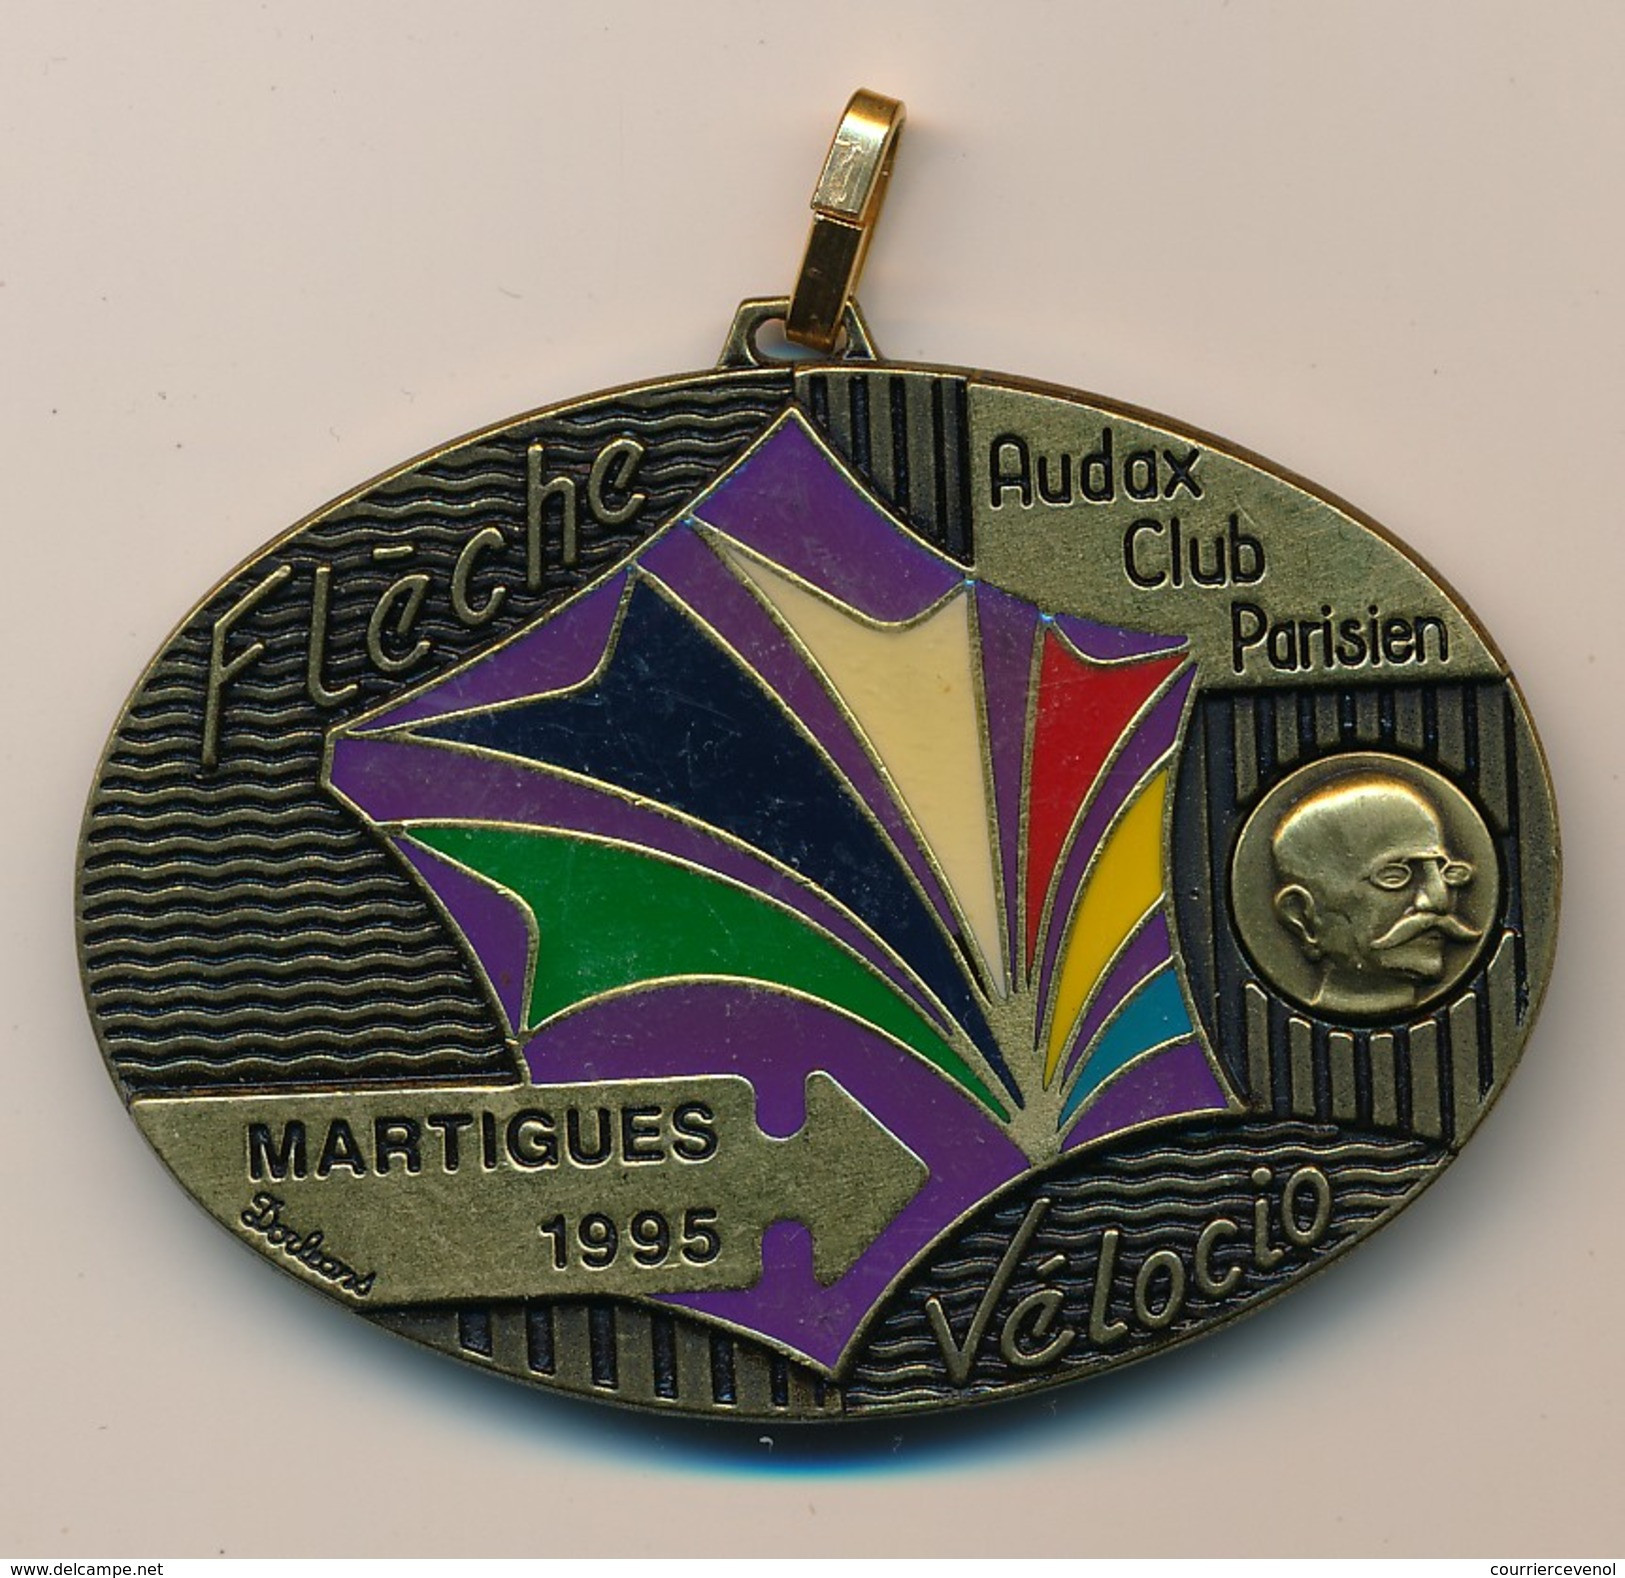 Médaille "Flèche Vélocio - Martigues 1995" - AUDAX CLUB PARISIEN - (Cyclotourisme) - Ciclismo